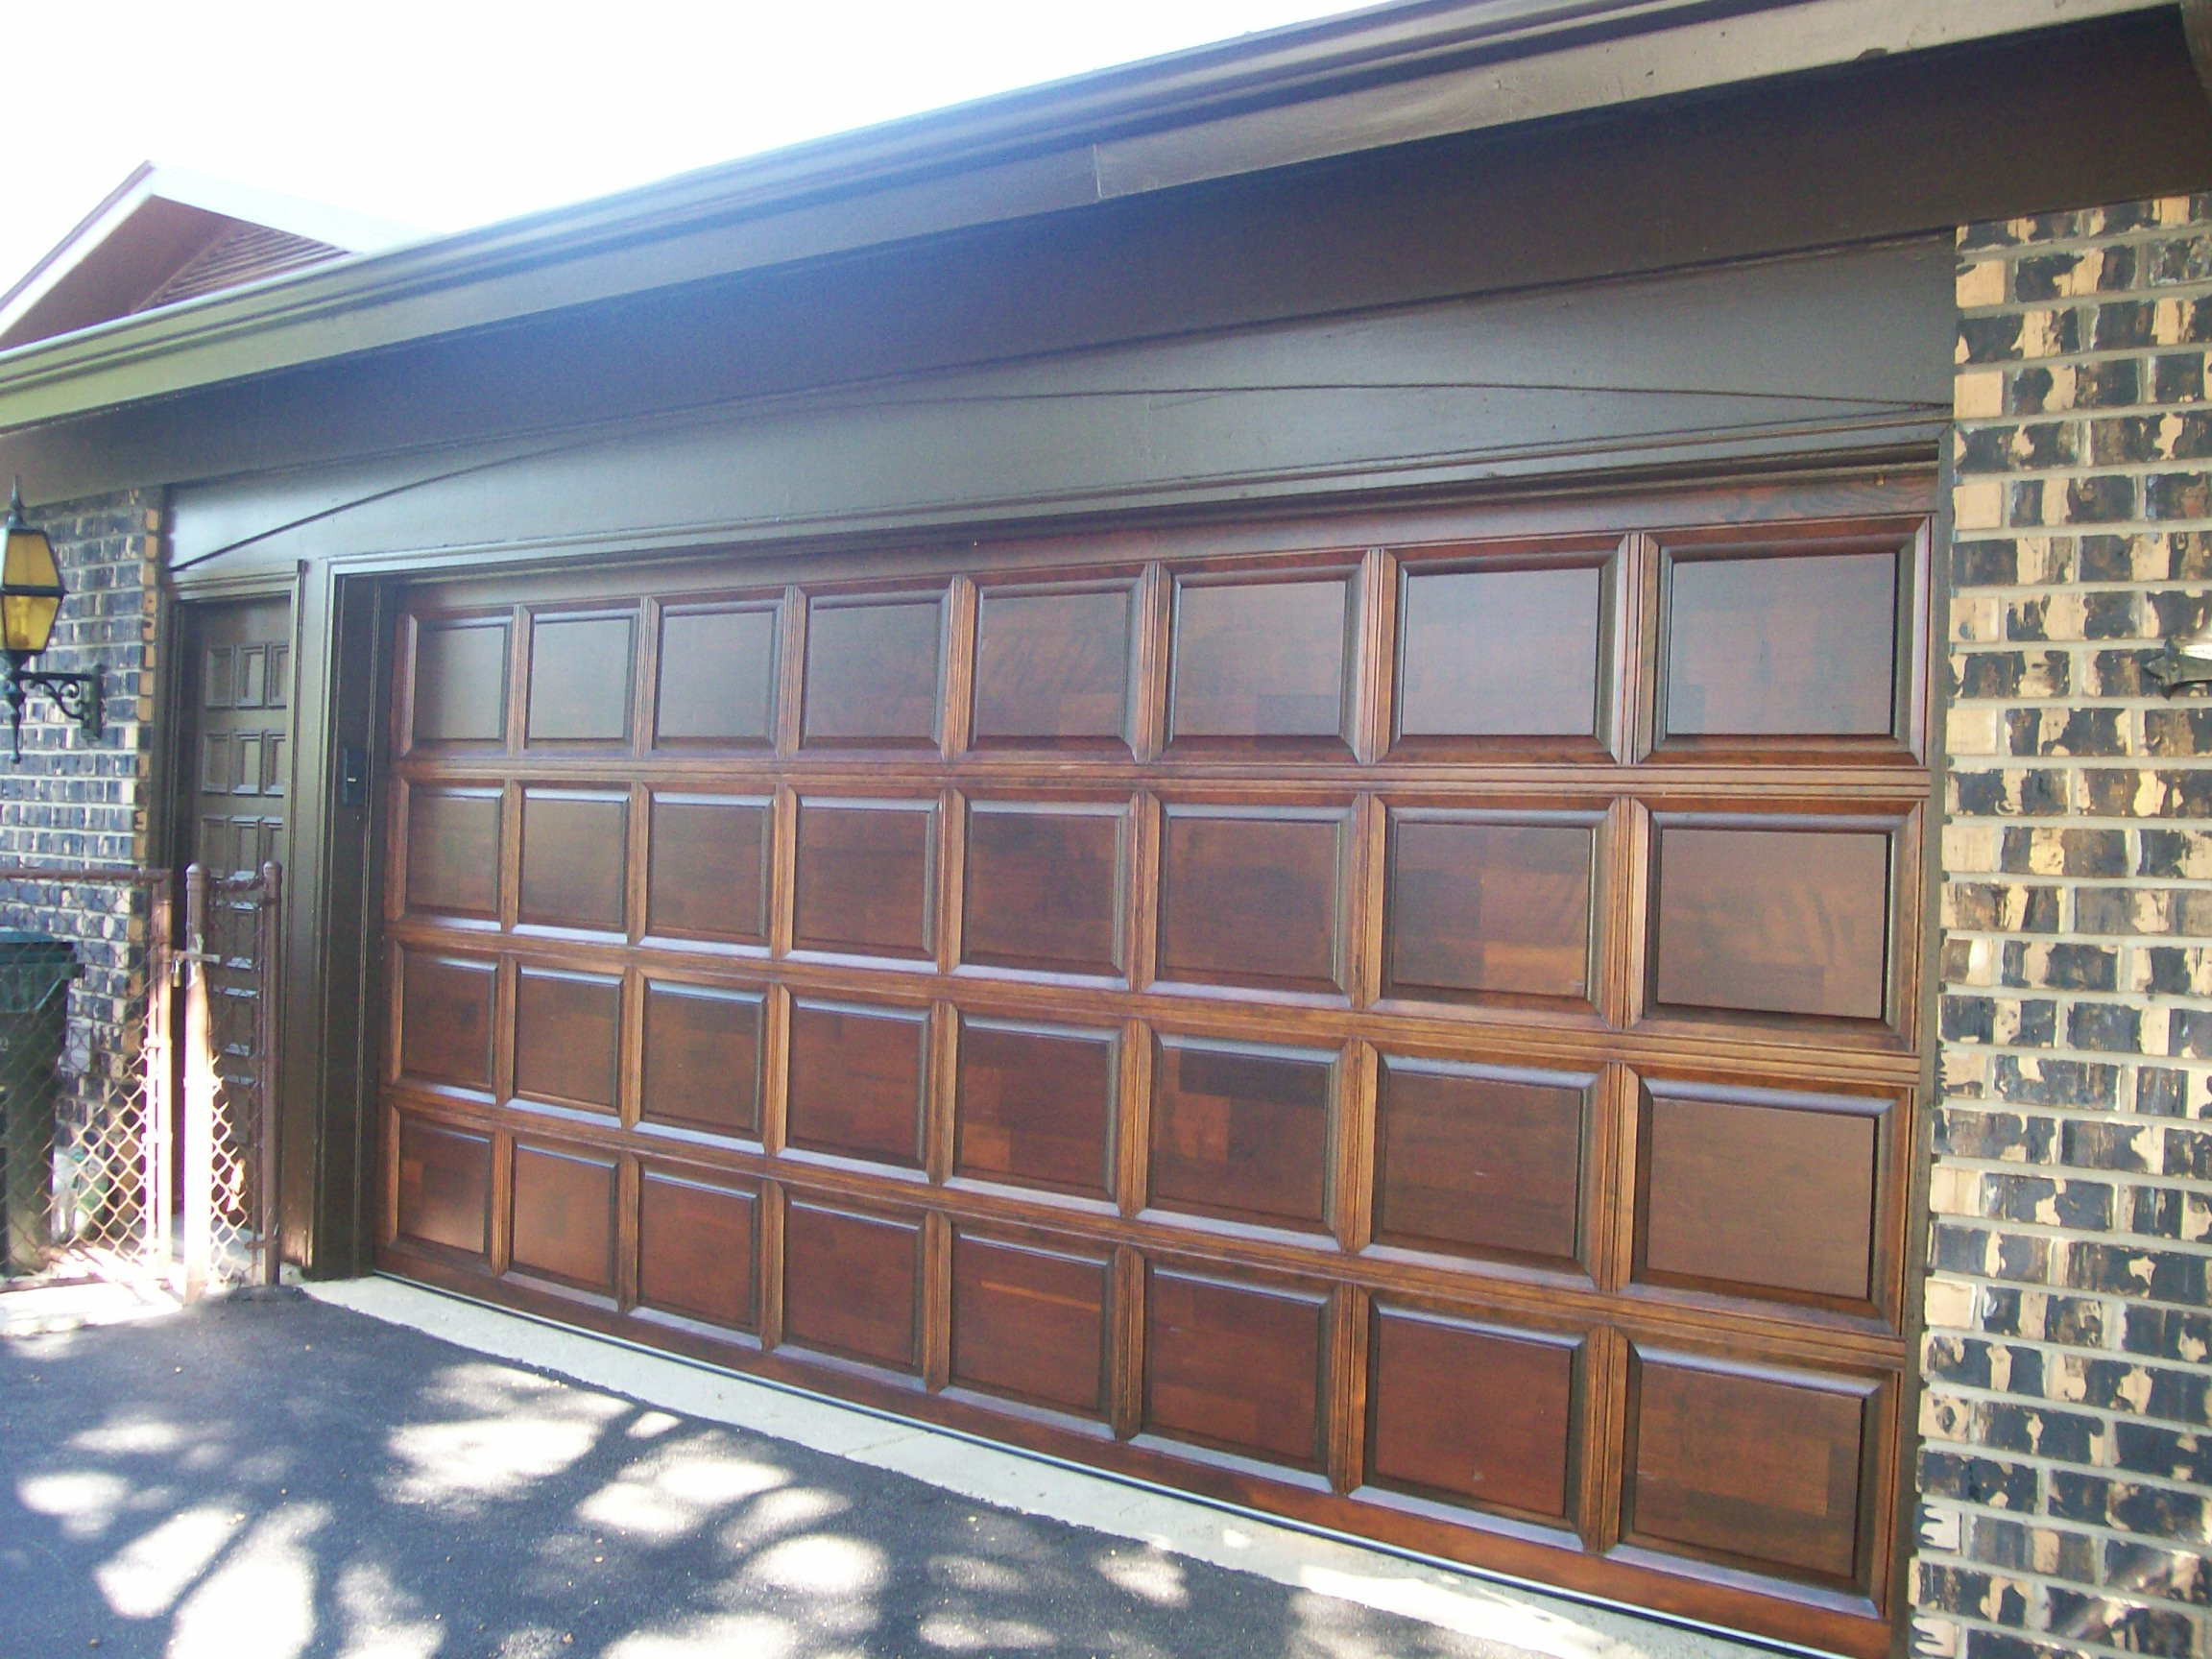 Best ideas about Garage Door Paint Ideas
. Save or Pin Garage Door Painting Ideas Furnitureteams Now.